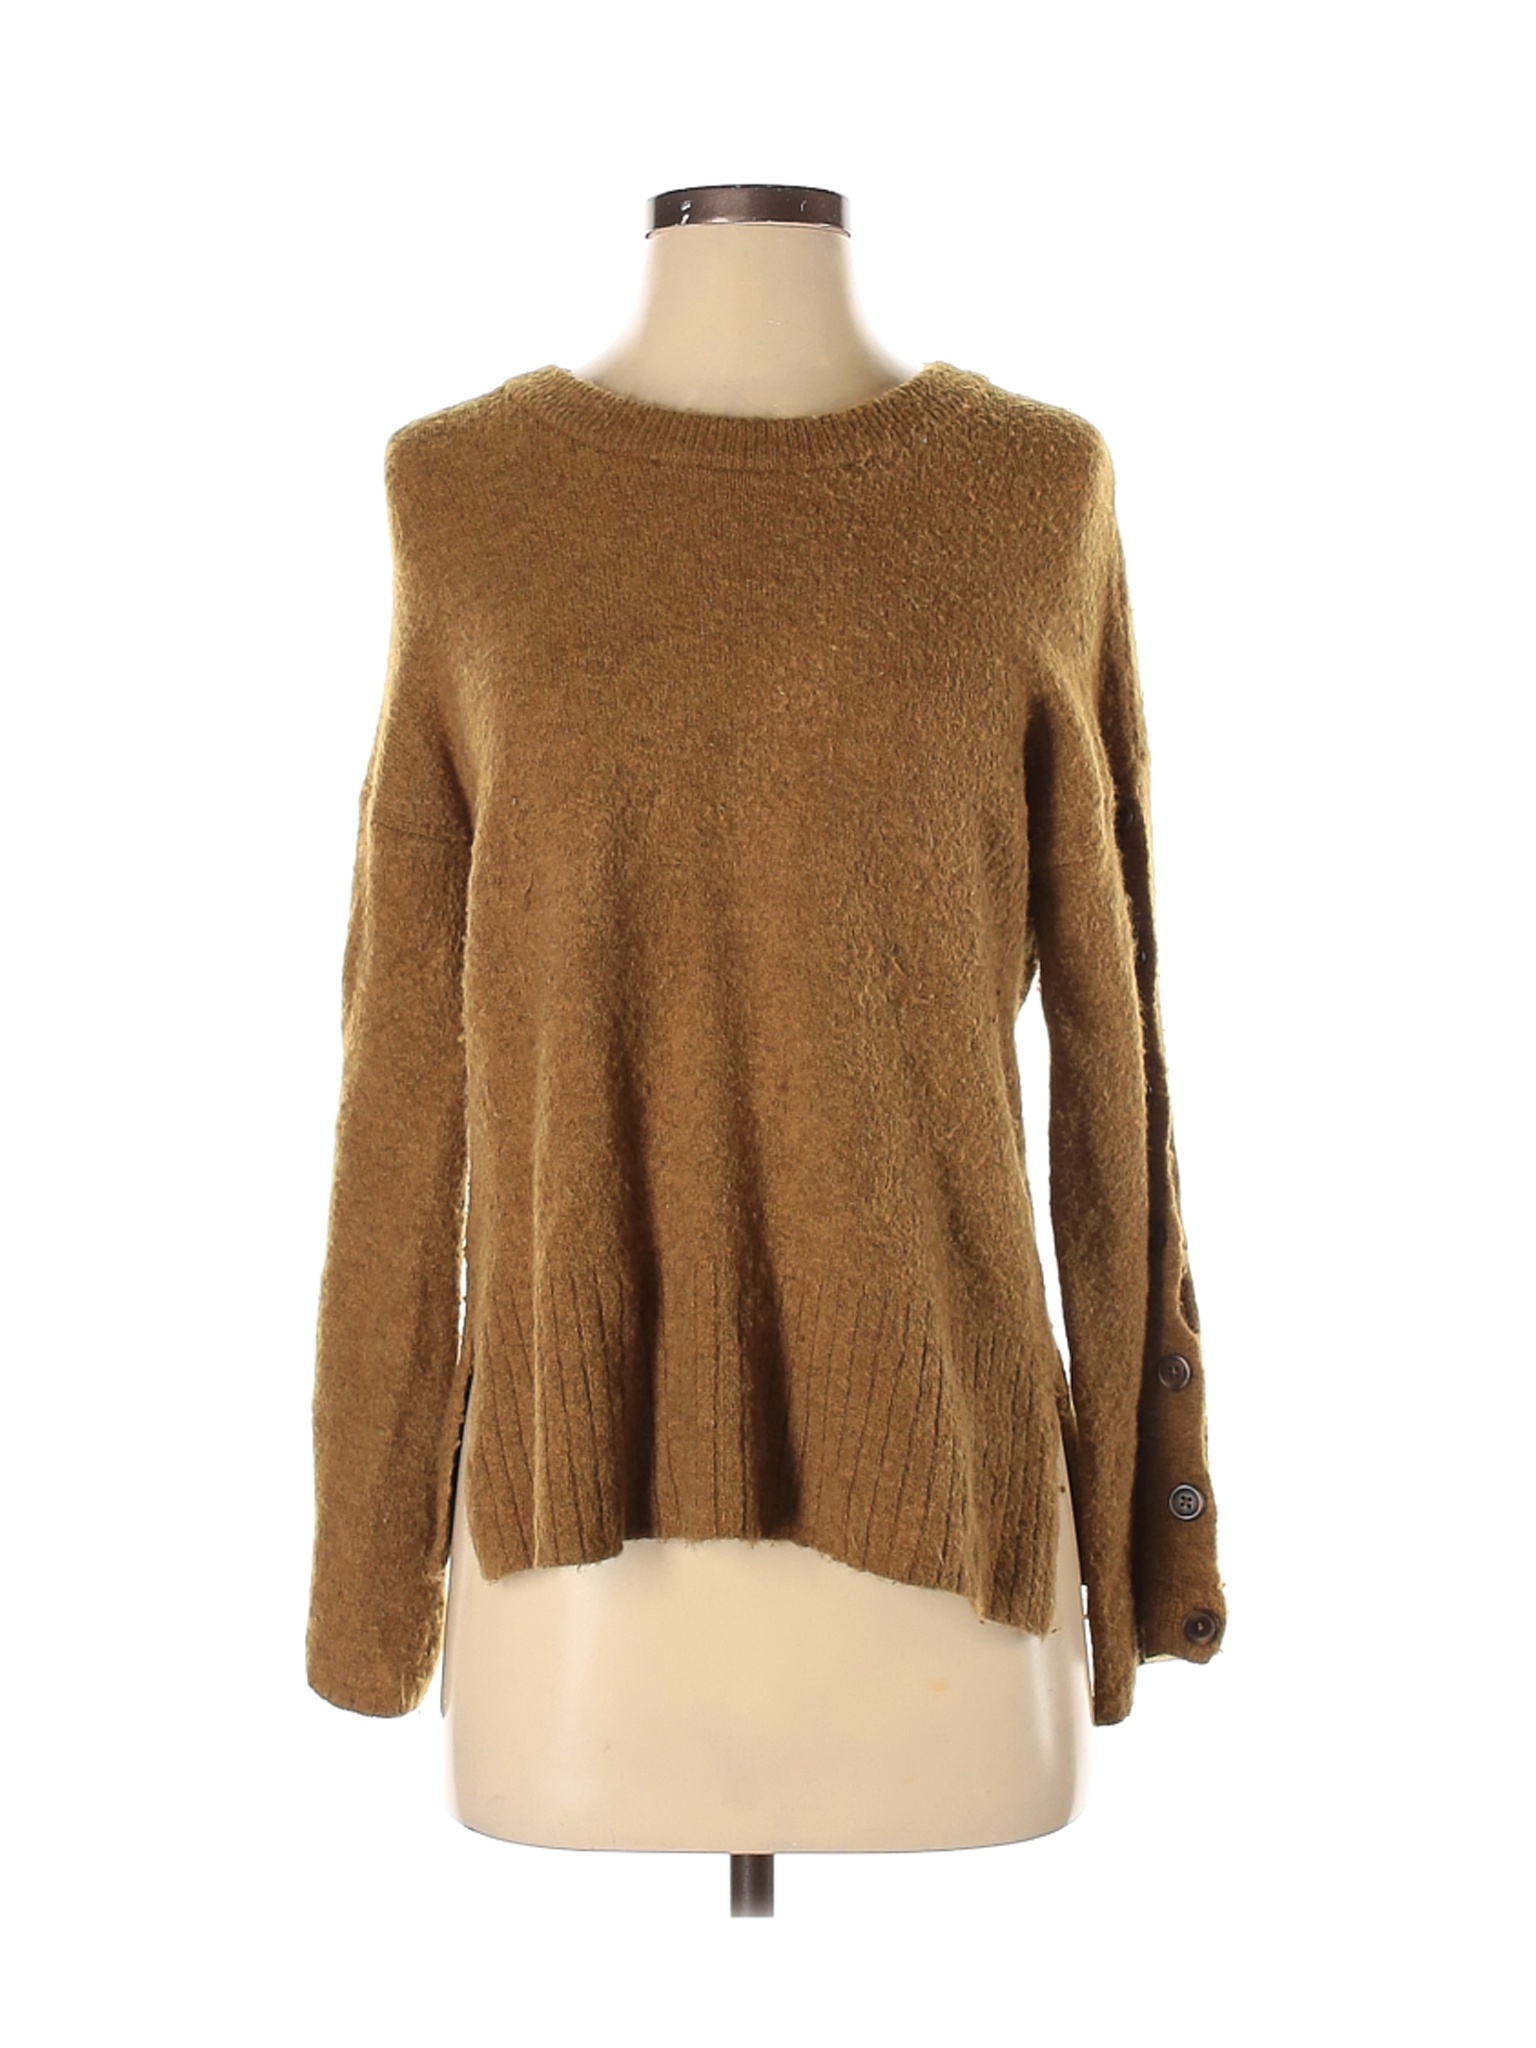 Madewell Women Brown Pullover Sweater XS | eBay